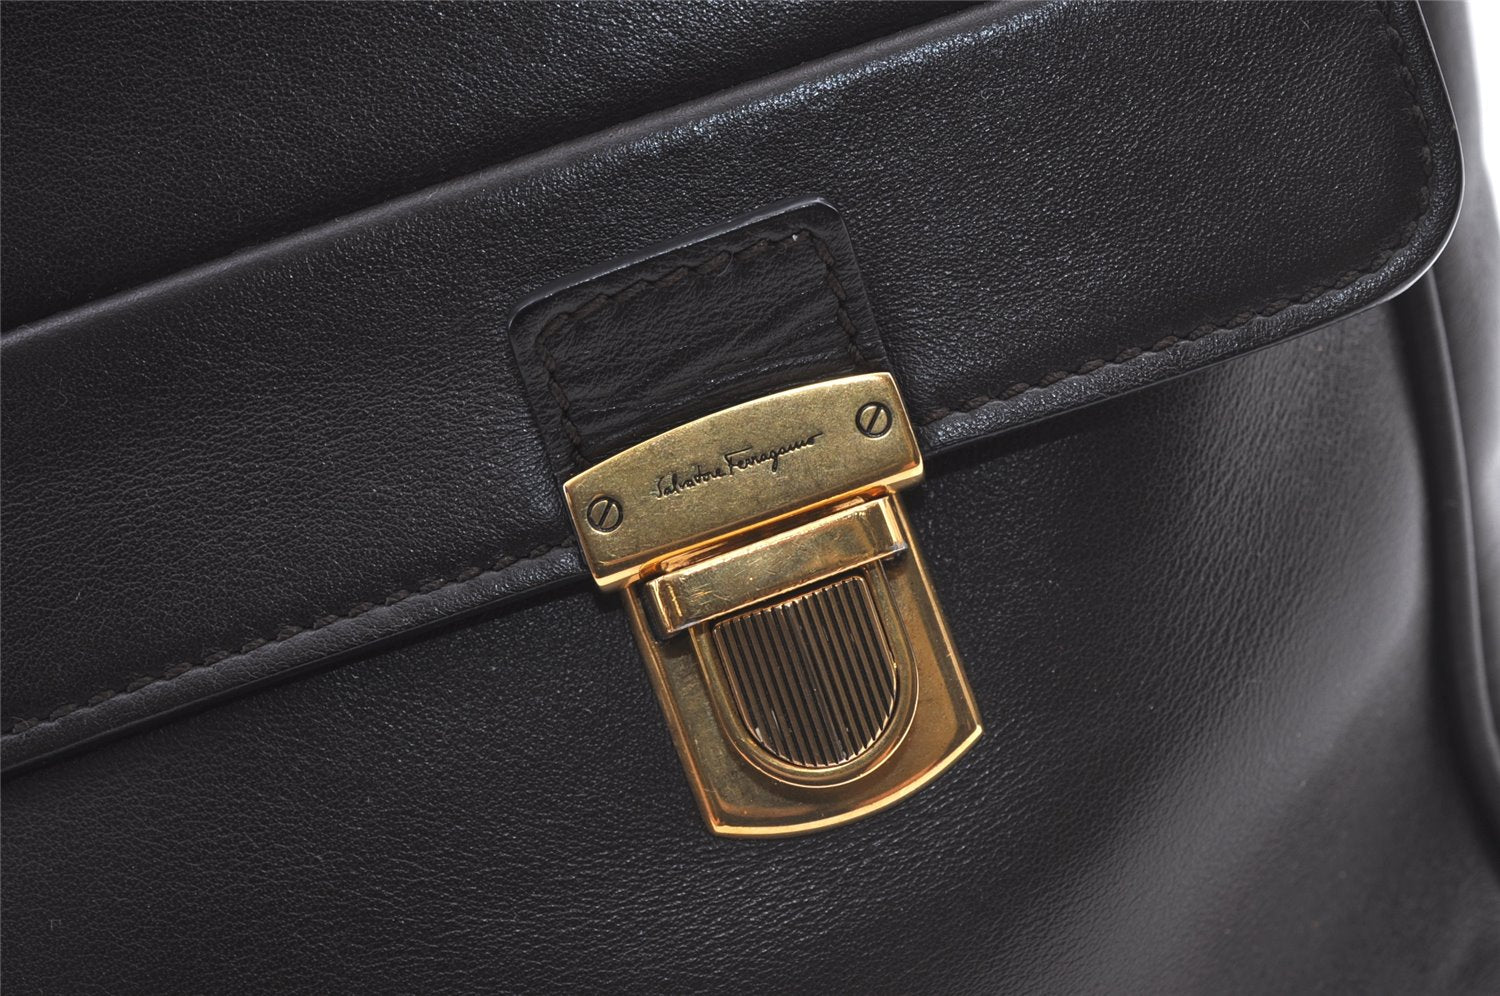 Authentic Salvatore Ferragamo Leather 2Way Briefcase Hand Bag Brown SF 8950J